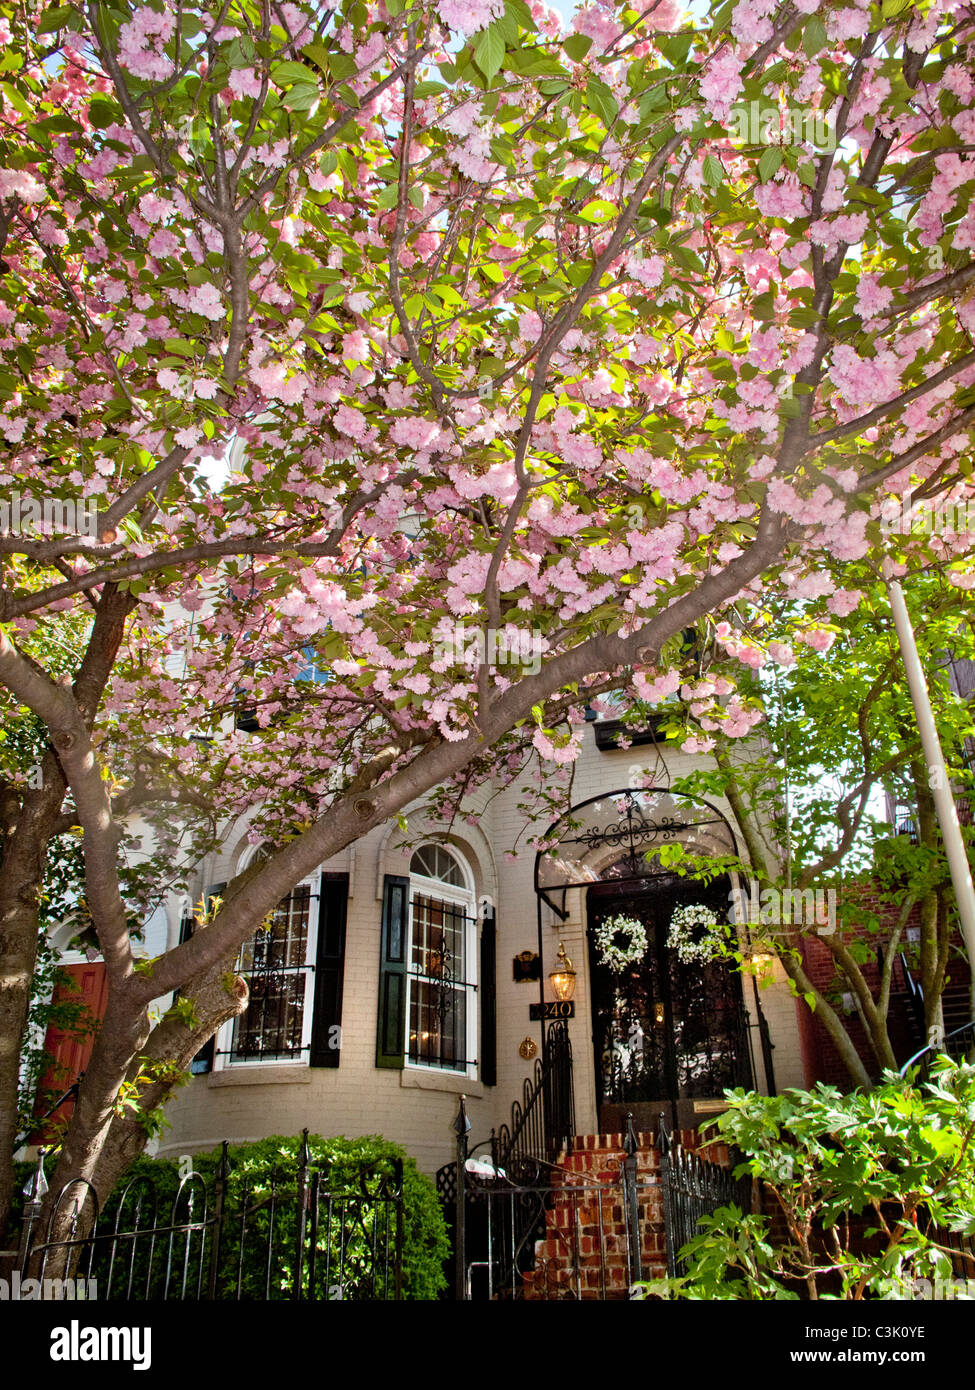 Sunlight shines on springtime flowering trees on historic N Street in the neighborhood of Georgetown, Washington, D.C. Stock Photo